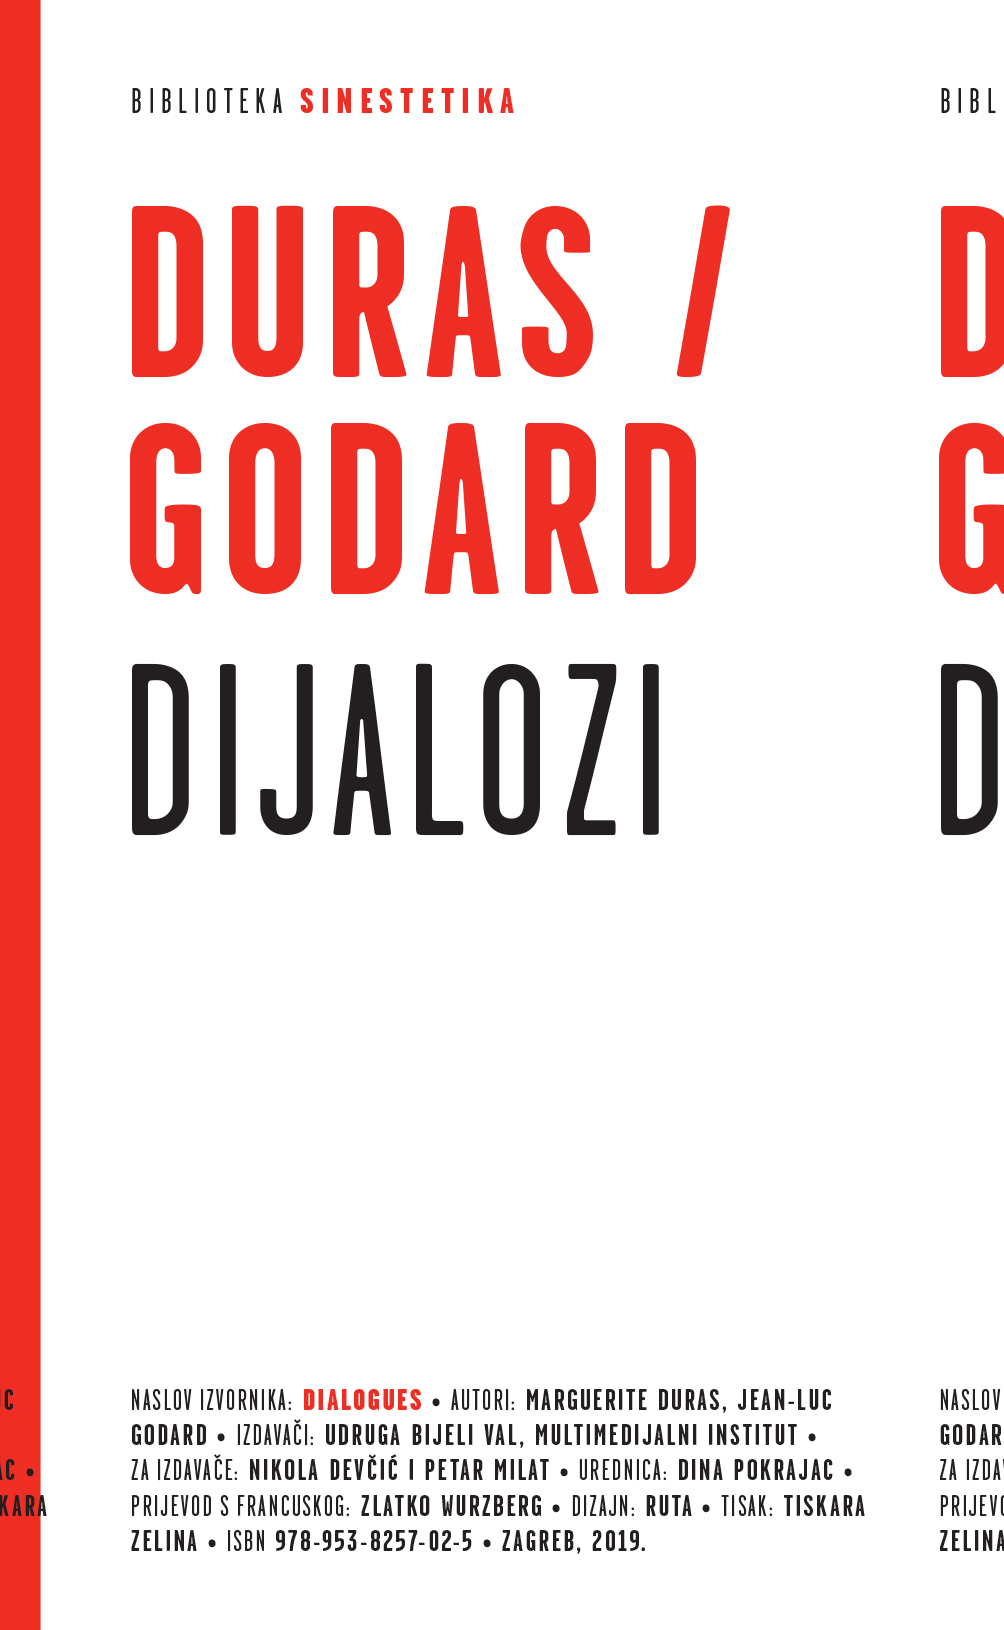 Marguerite Duras & Jean-Luc Godard: Dijalozi [2019 // 132 str. // prijevod: Zlatko Wurzberg / u suradnji sa Subversive Festivalom]